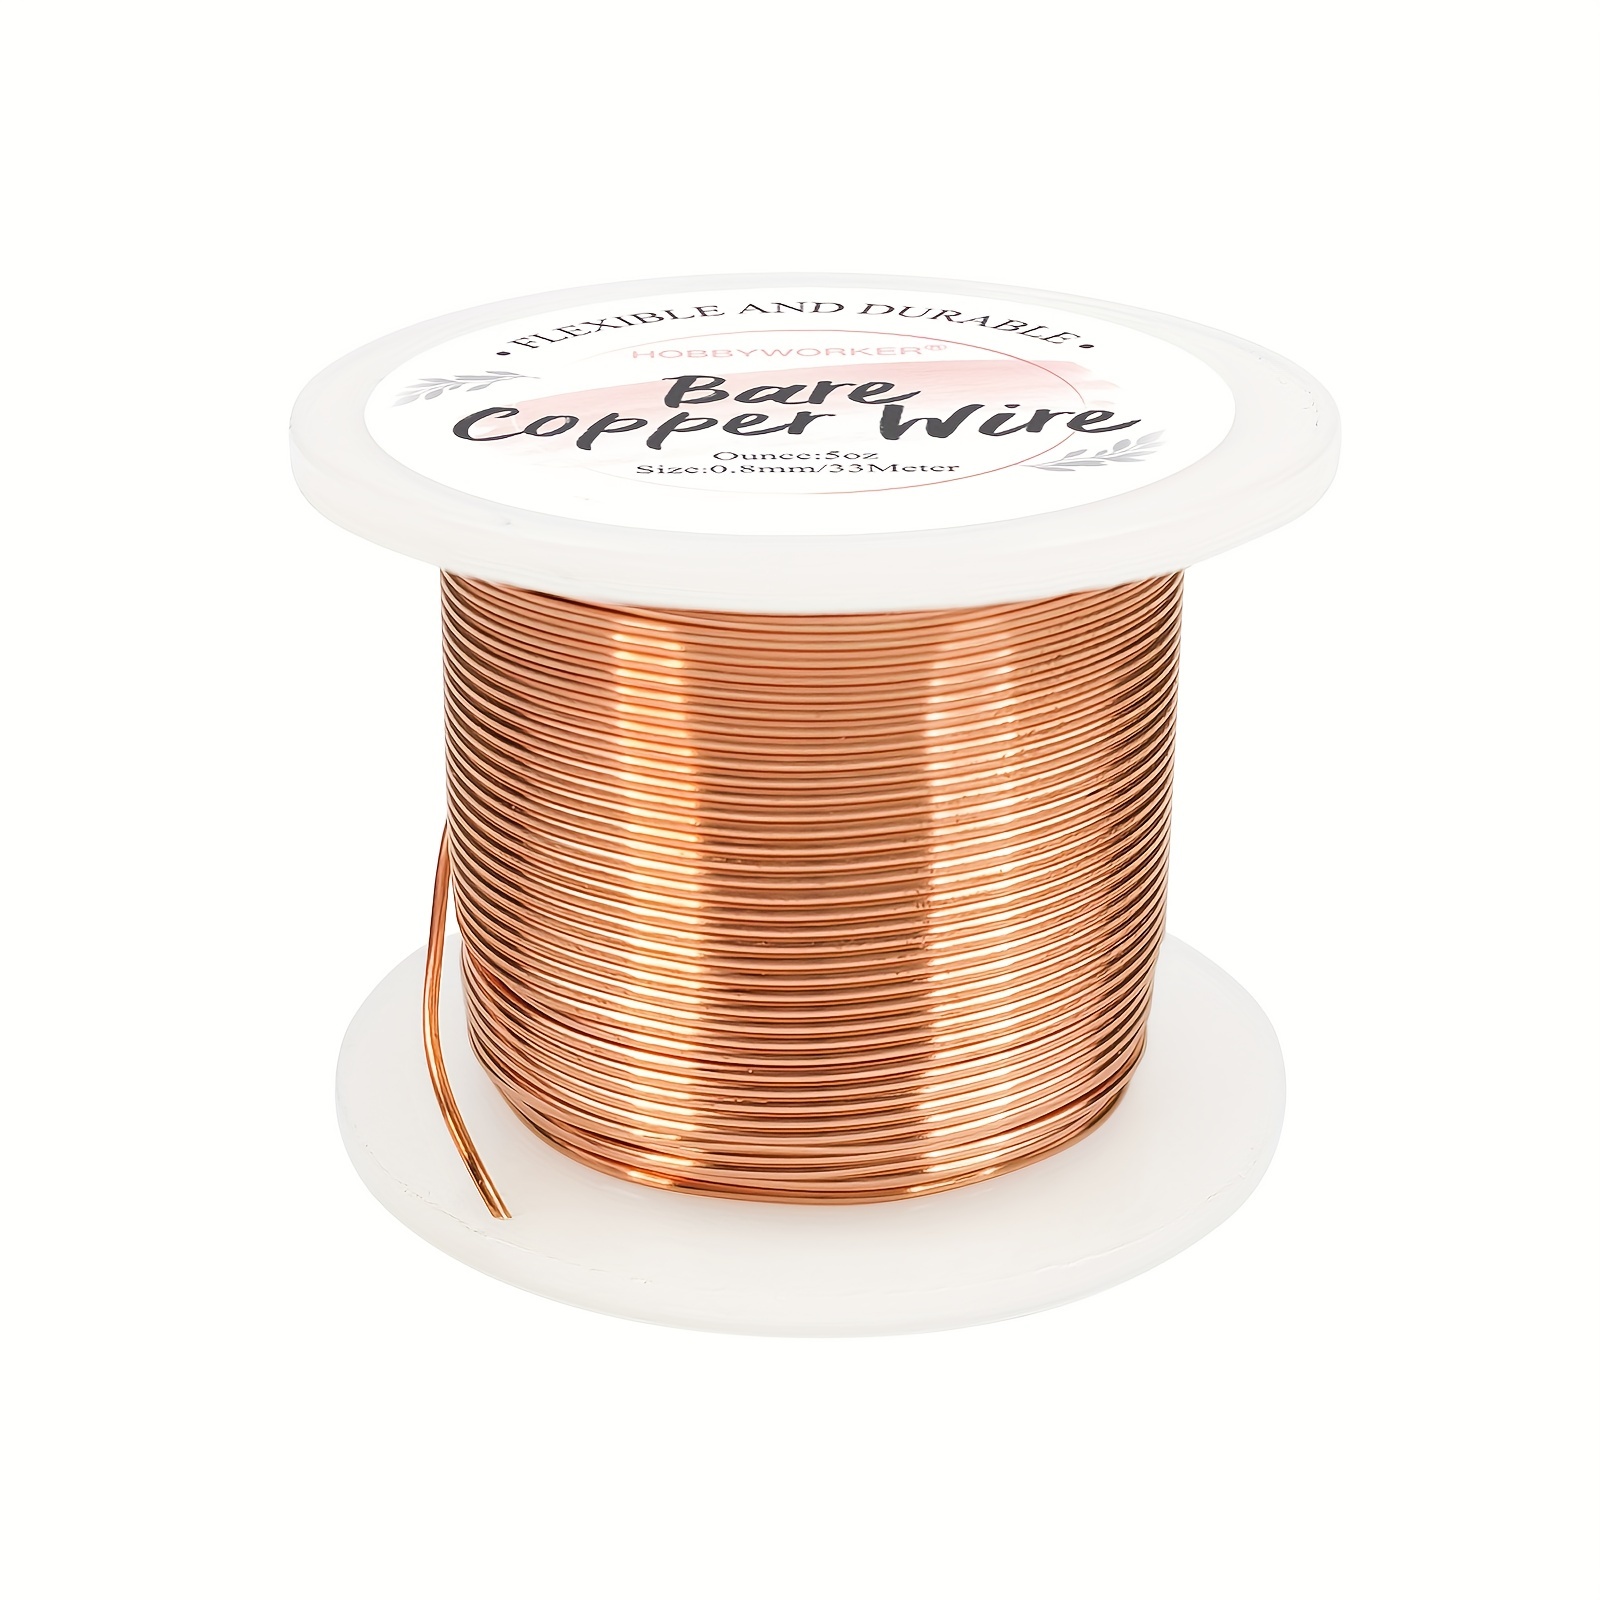 1 Roll Enameled Copper Wire 20 Gauge Craft DIY Jewelry Making 0.2